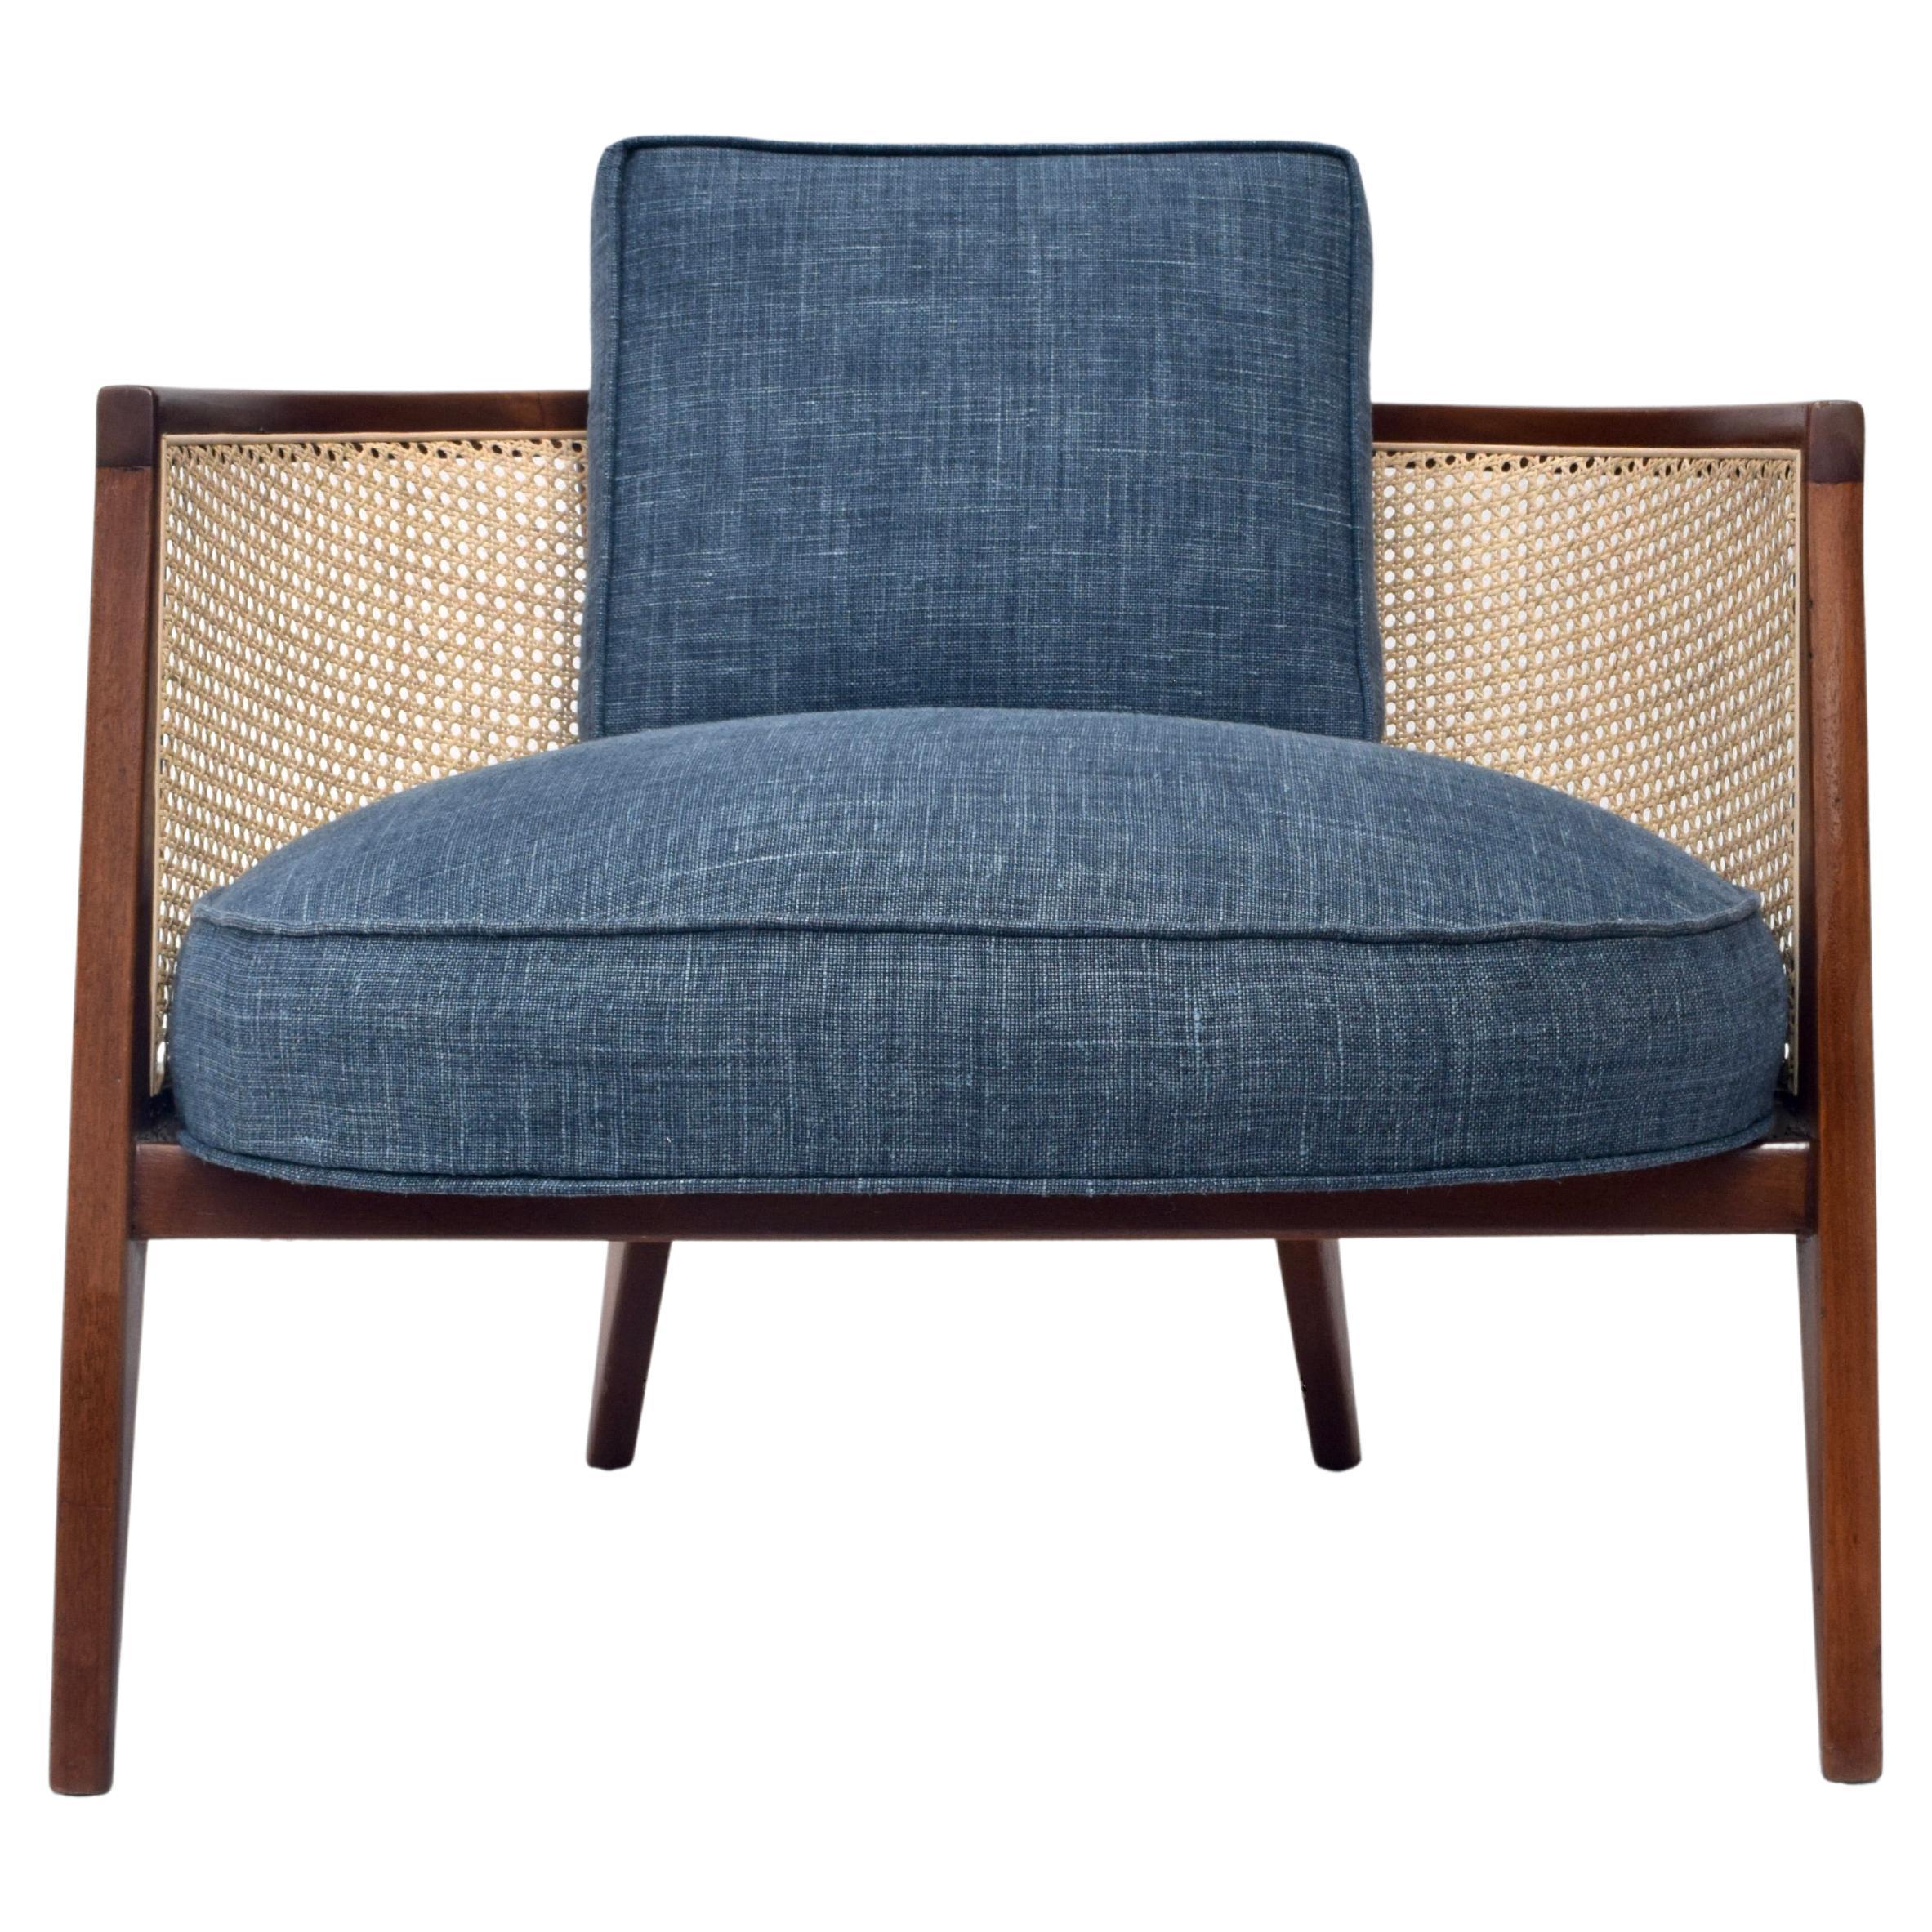 Harvey Probber Cane Barrel Lounge Chair in Indigo Belgian Linen